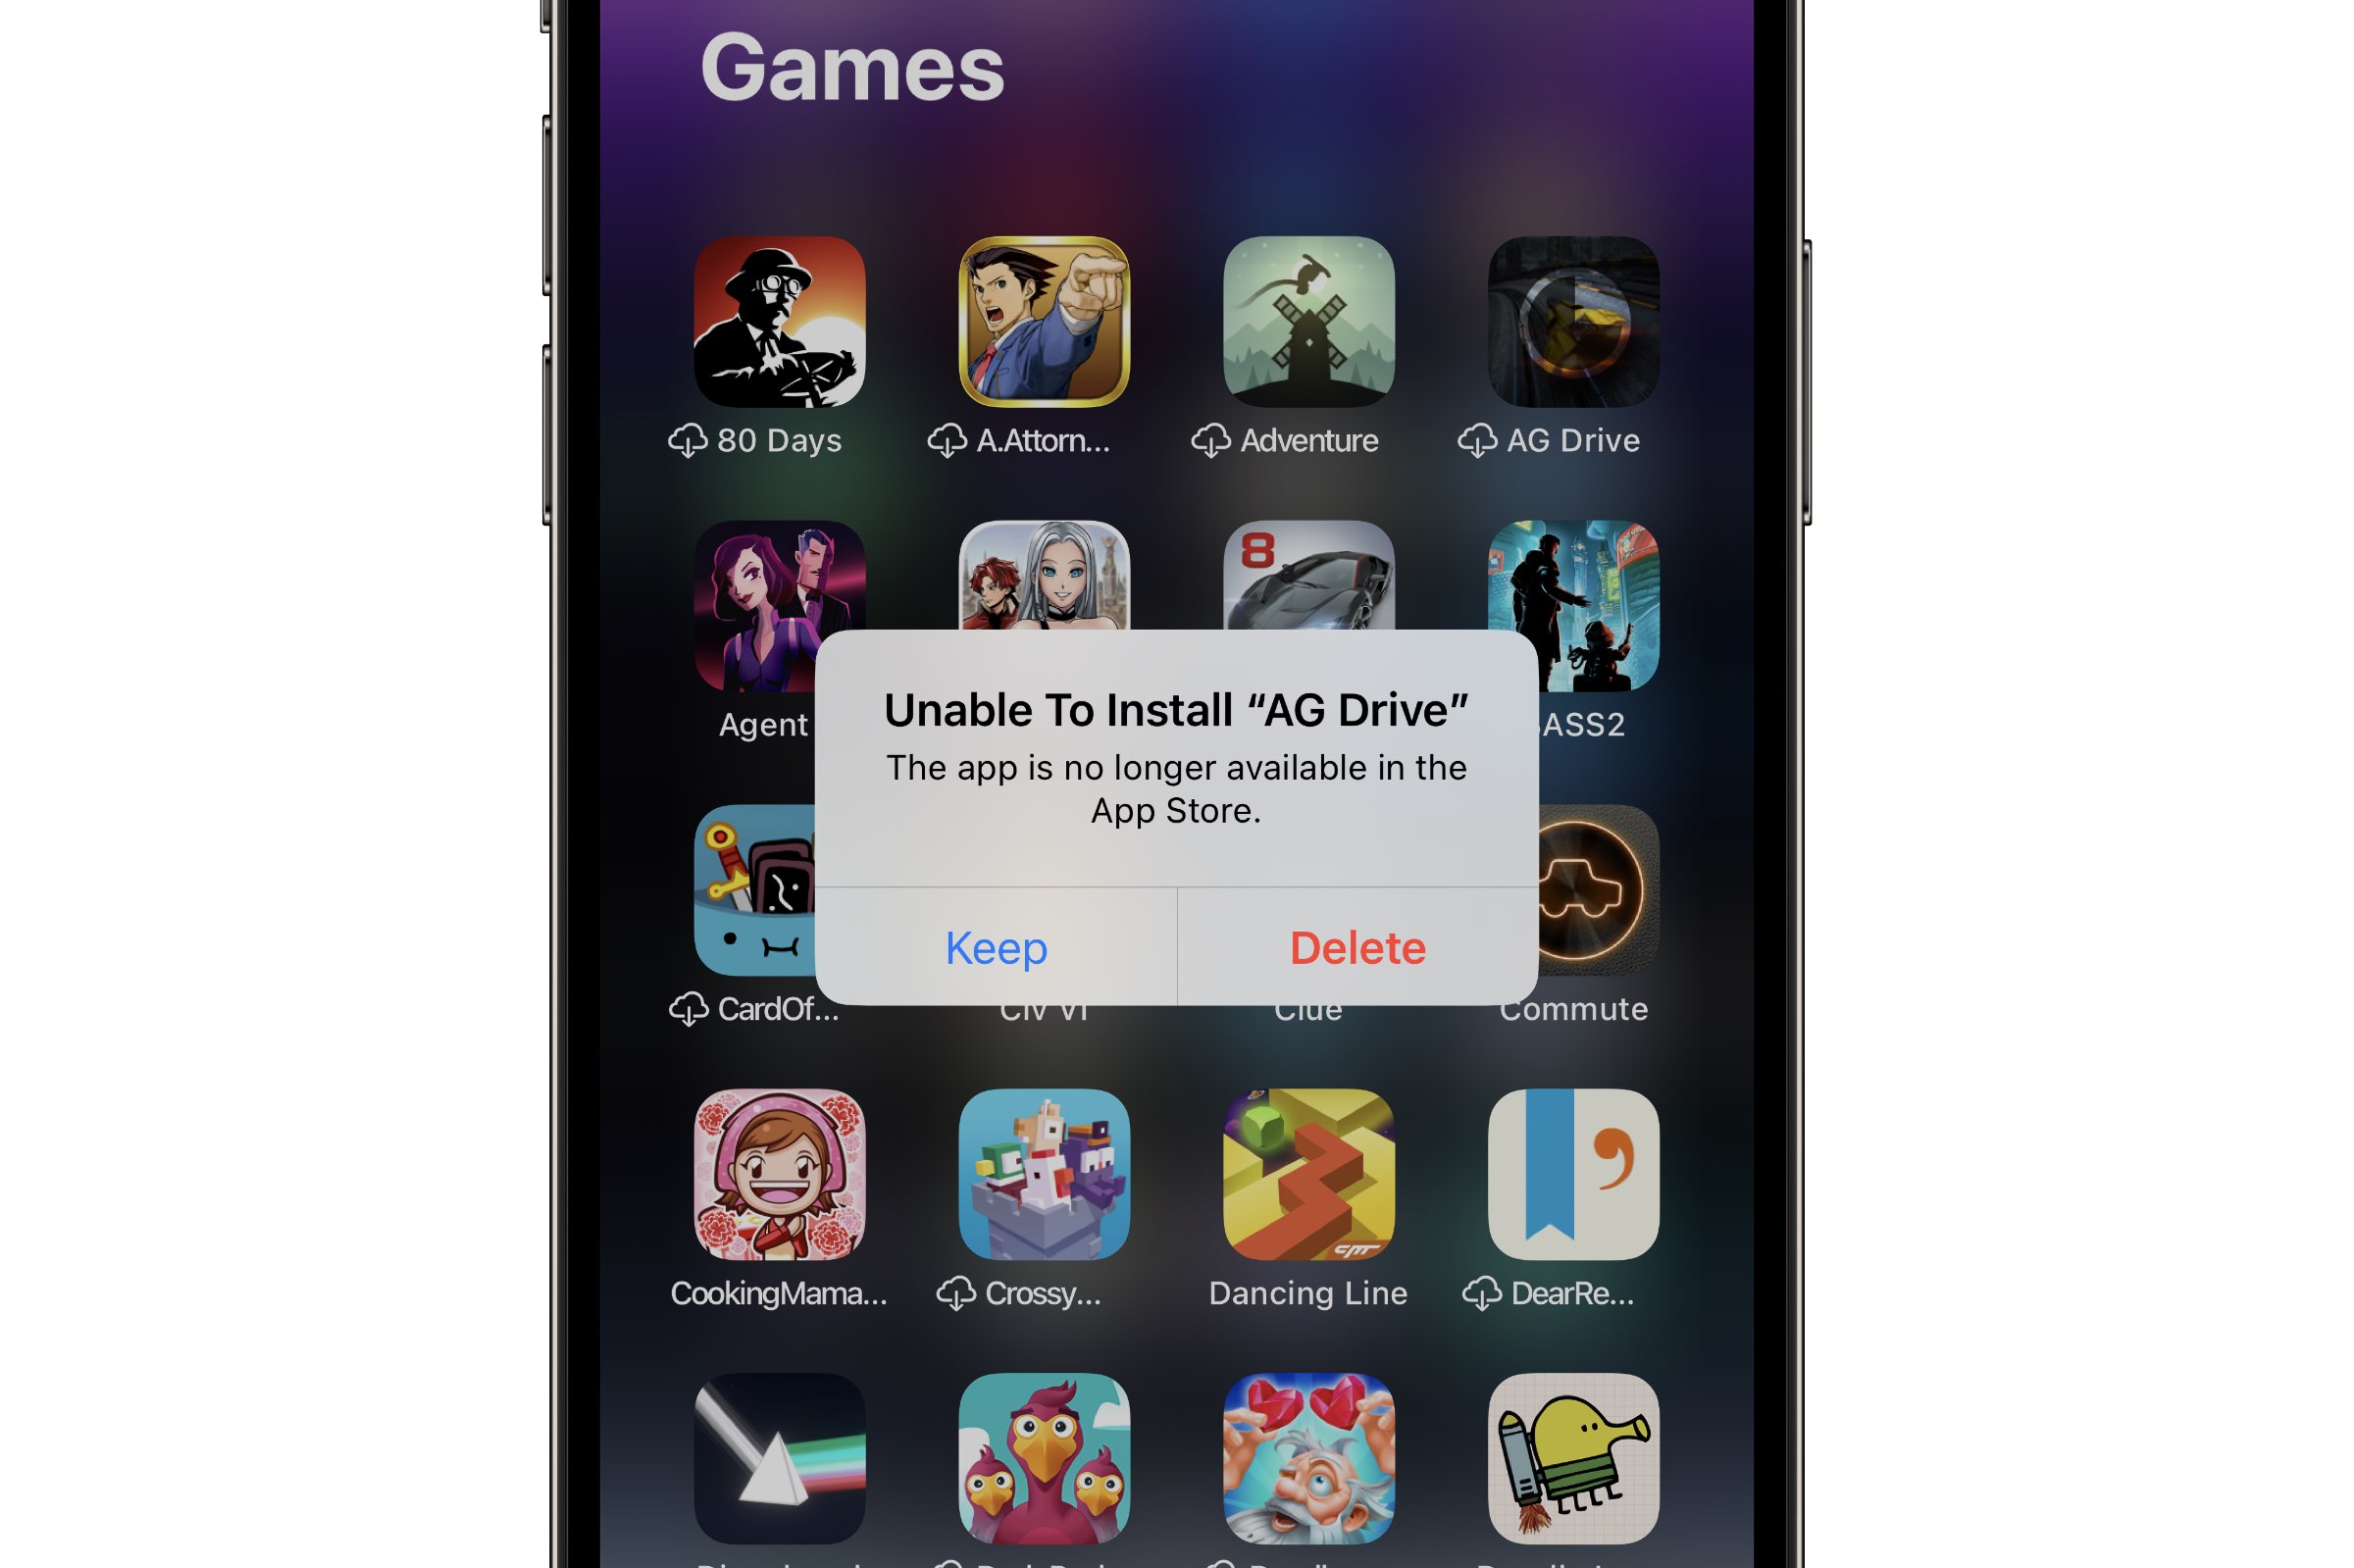 An iPhone showing an error message that an offloaded app cannot be reinstalled.